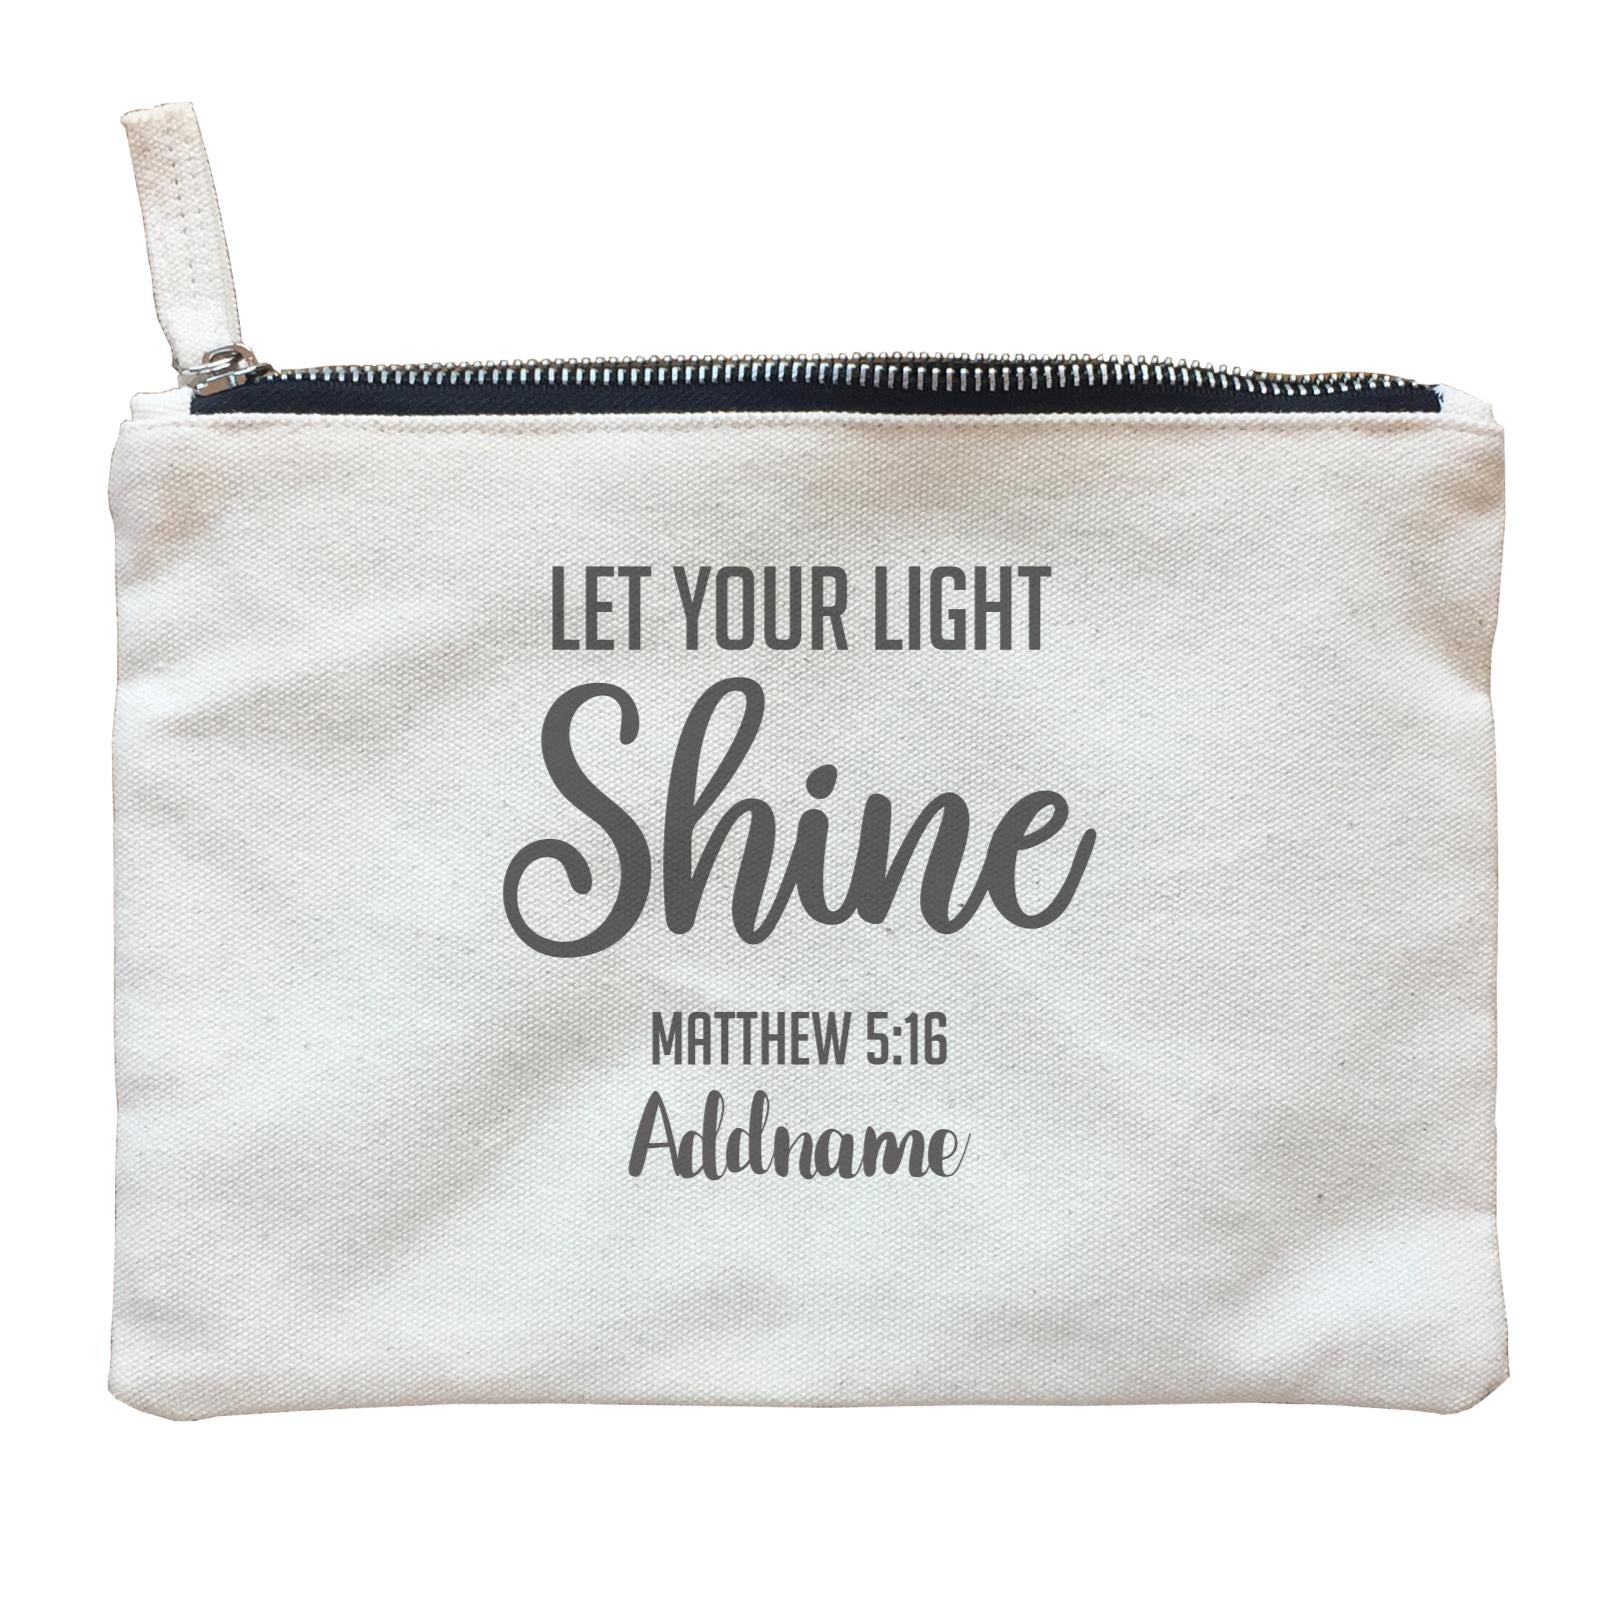 Christian Series Let Your Light Shine Matthew 5.16 Addname Zipper Pouch